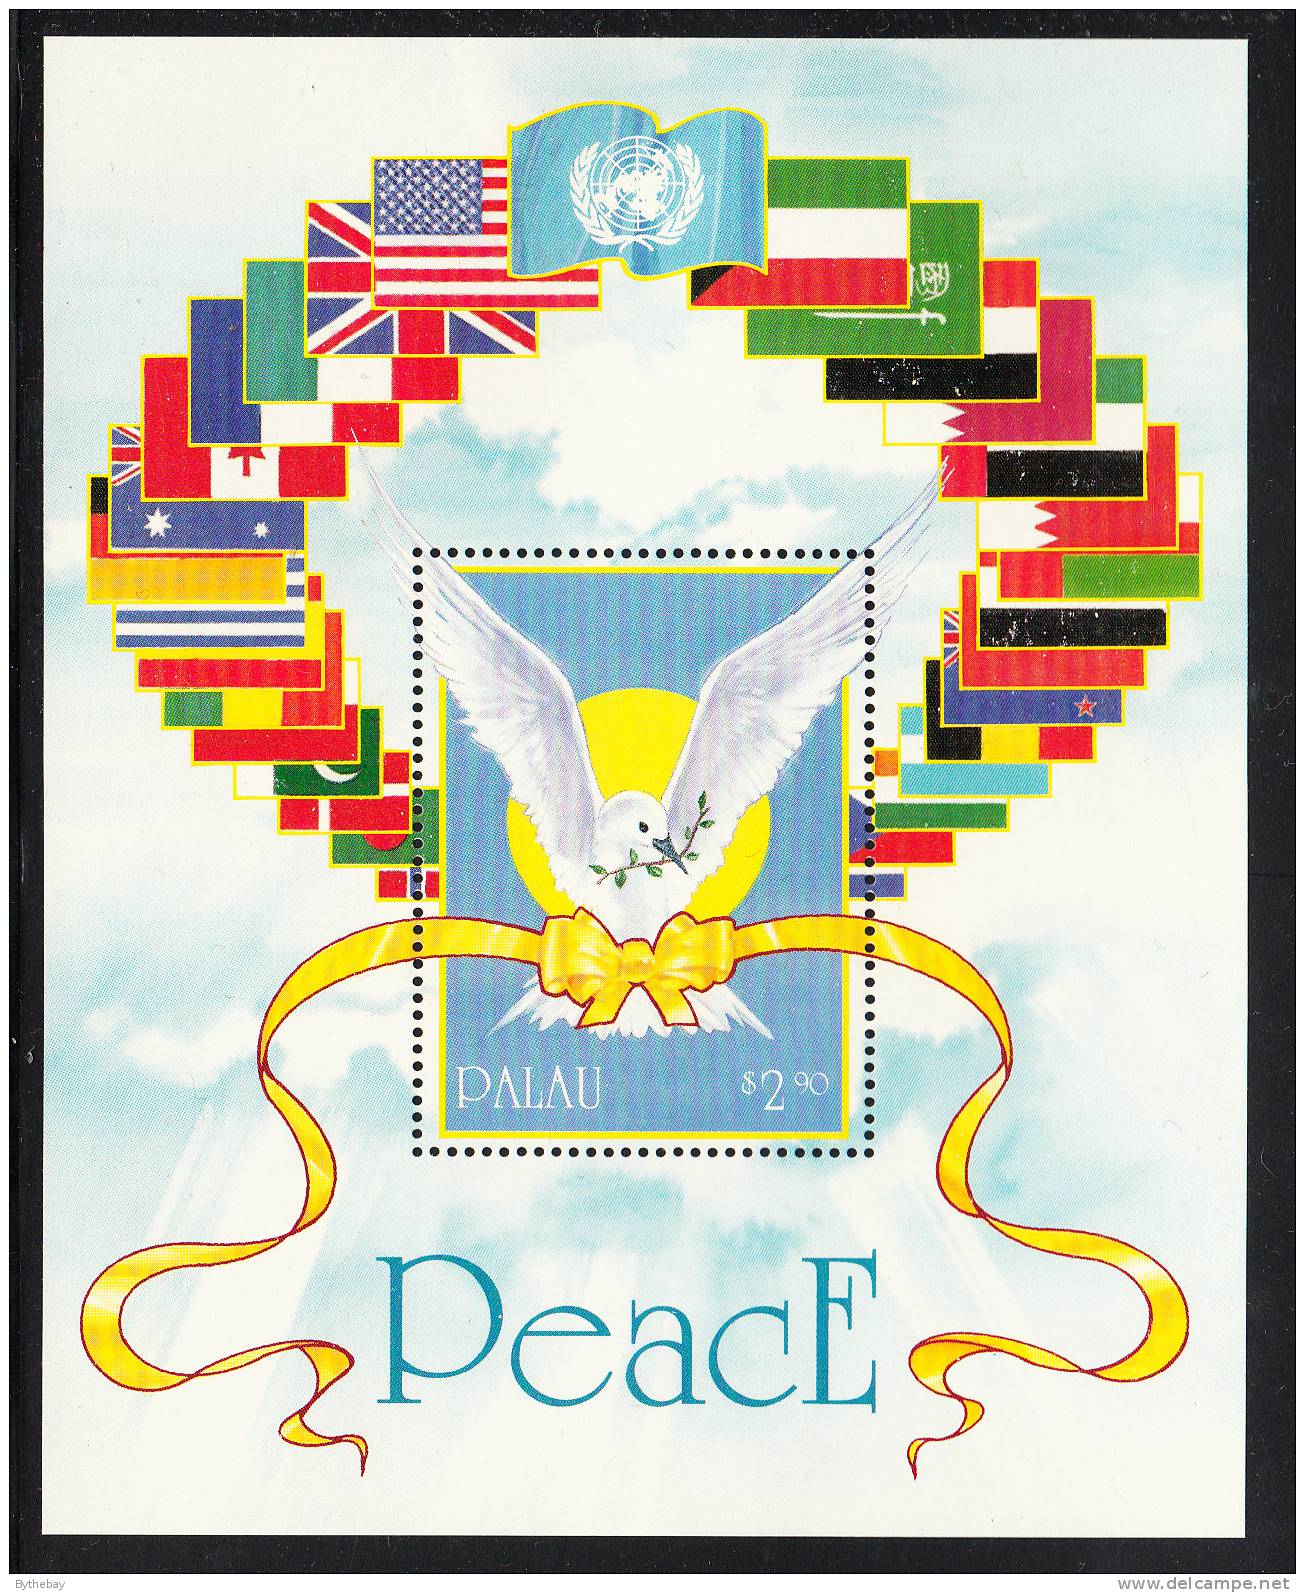 Palau Scott #292 MNH Souvenir Sheet $2.90 Peace - Operation Desert Shield/Storm - Palau